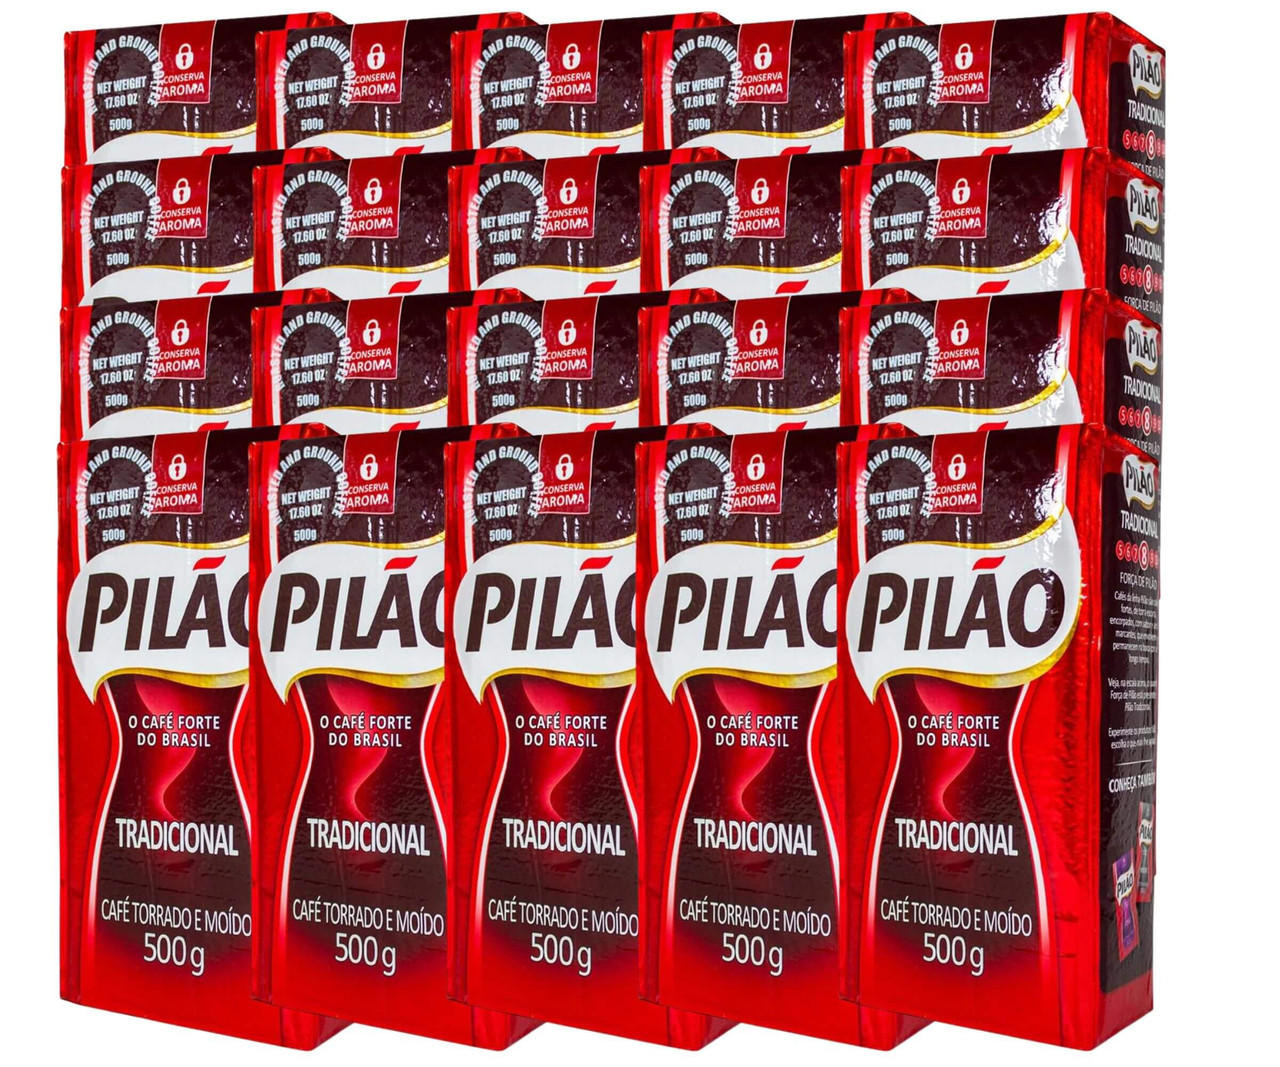  Pilão Ground Coffee 500g (20-Case) - Experience the Authentic Taste of Brazil 